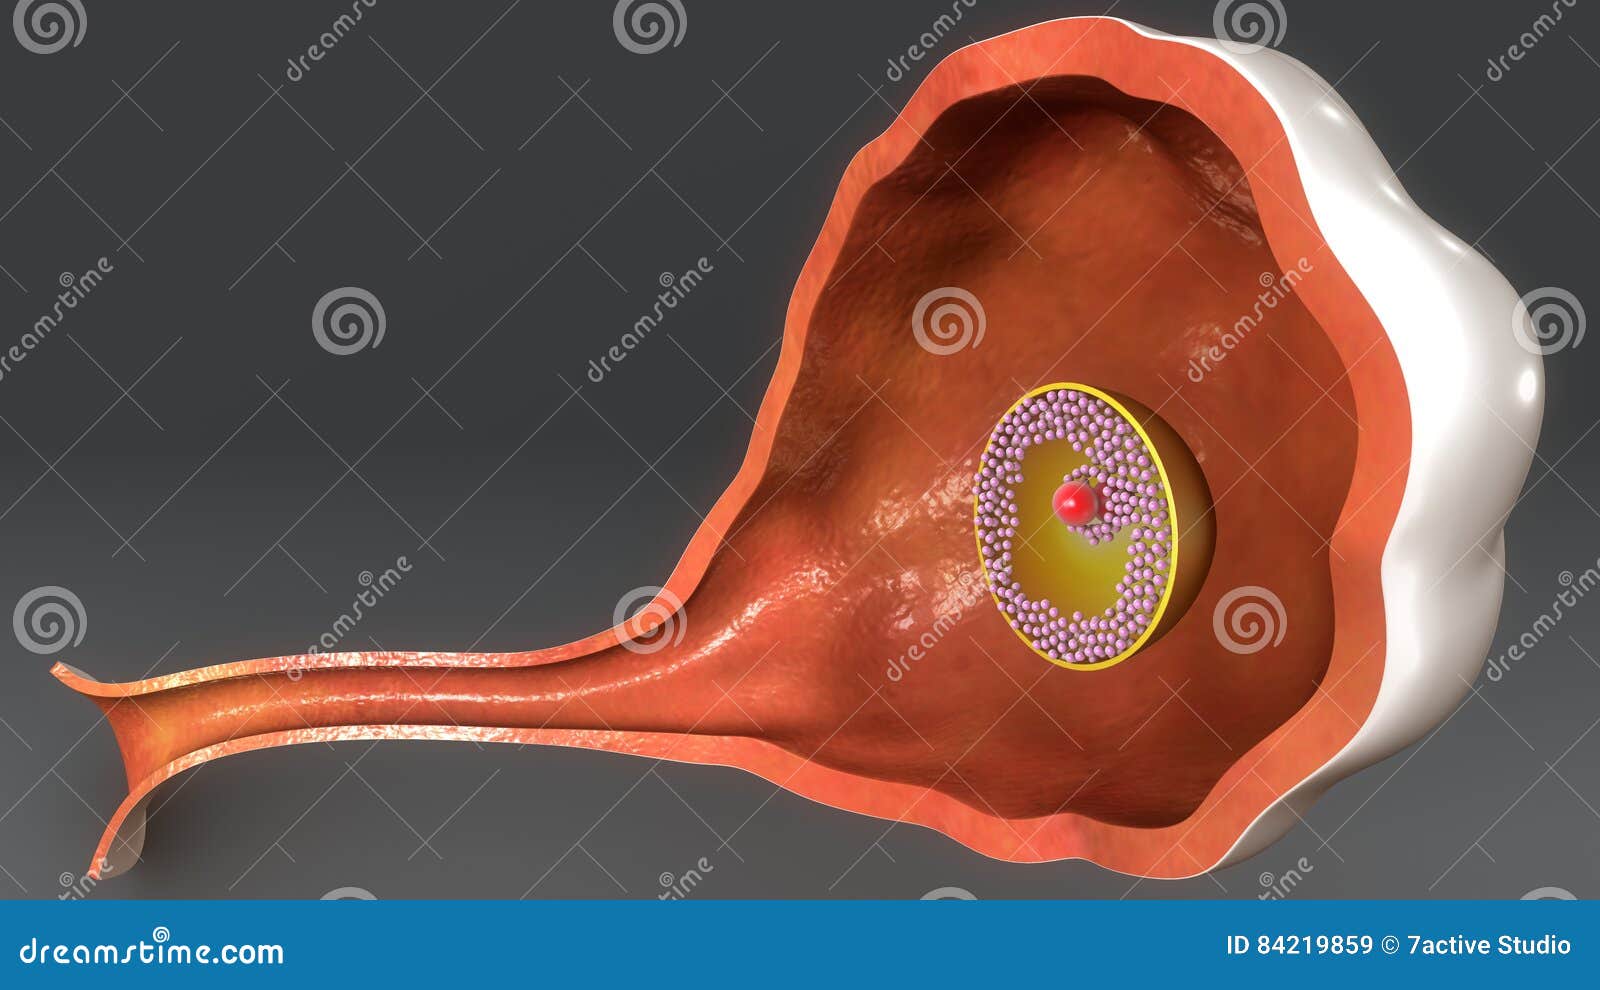 Ovary Anatomy stock illustration. Illustration of organs - 84219859